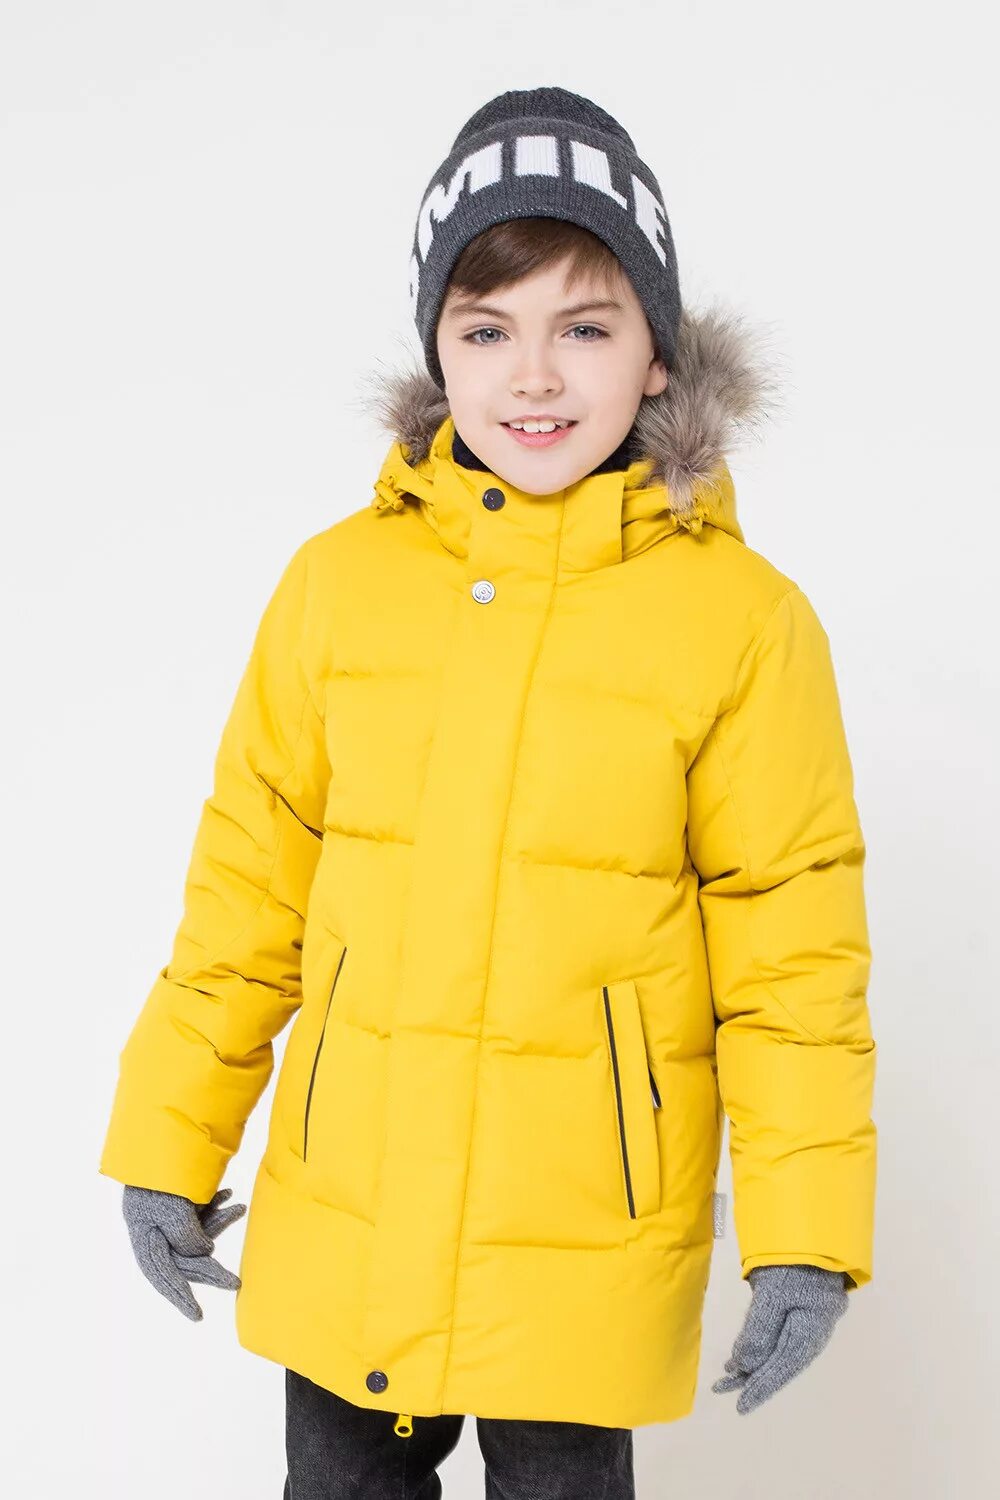 Желтая куртка для мальчика. Крокид зимняя куртка 116 желтая. Зимняя куртка Крокид для мальчика жёлтая. Crockid желтая куртка зима мальчик. Желтая куртка для мальчика Крокид зимняя 2019.